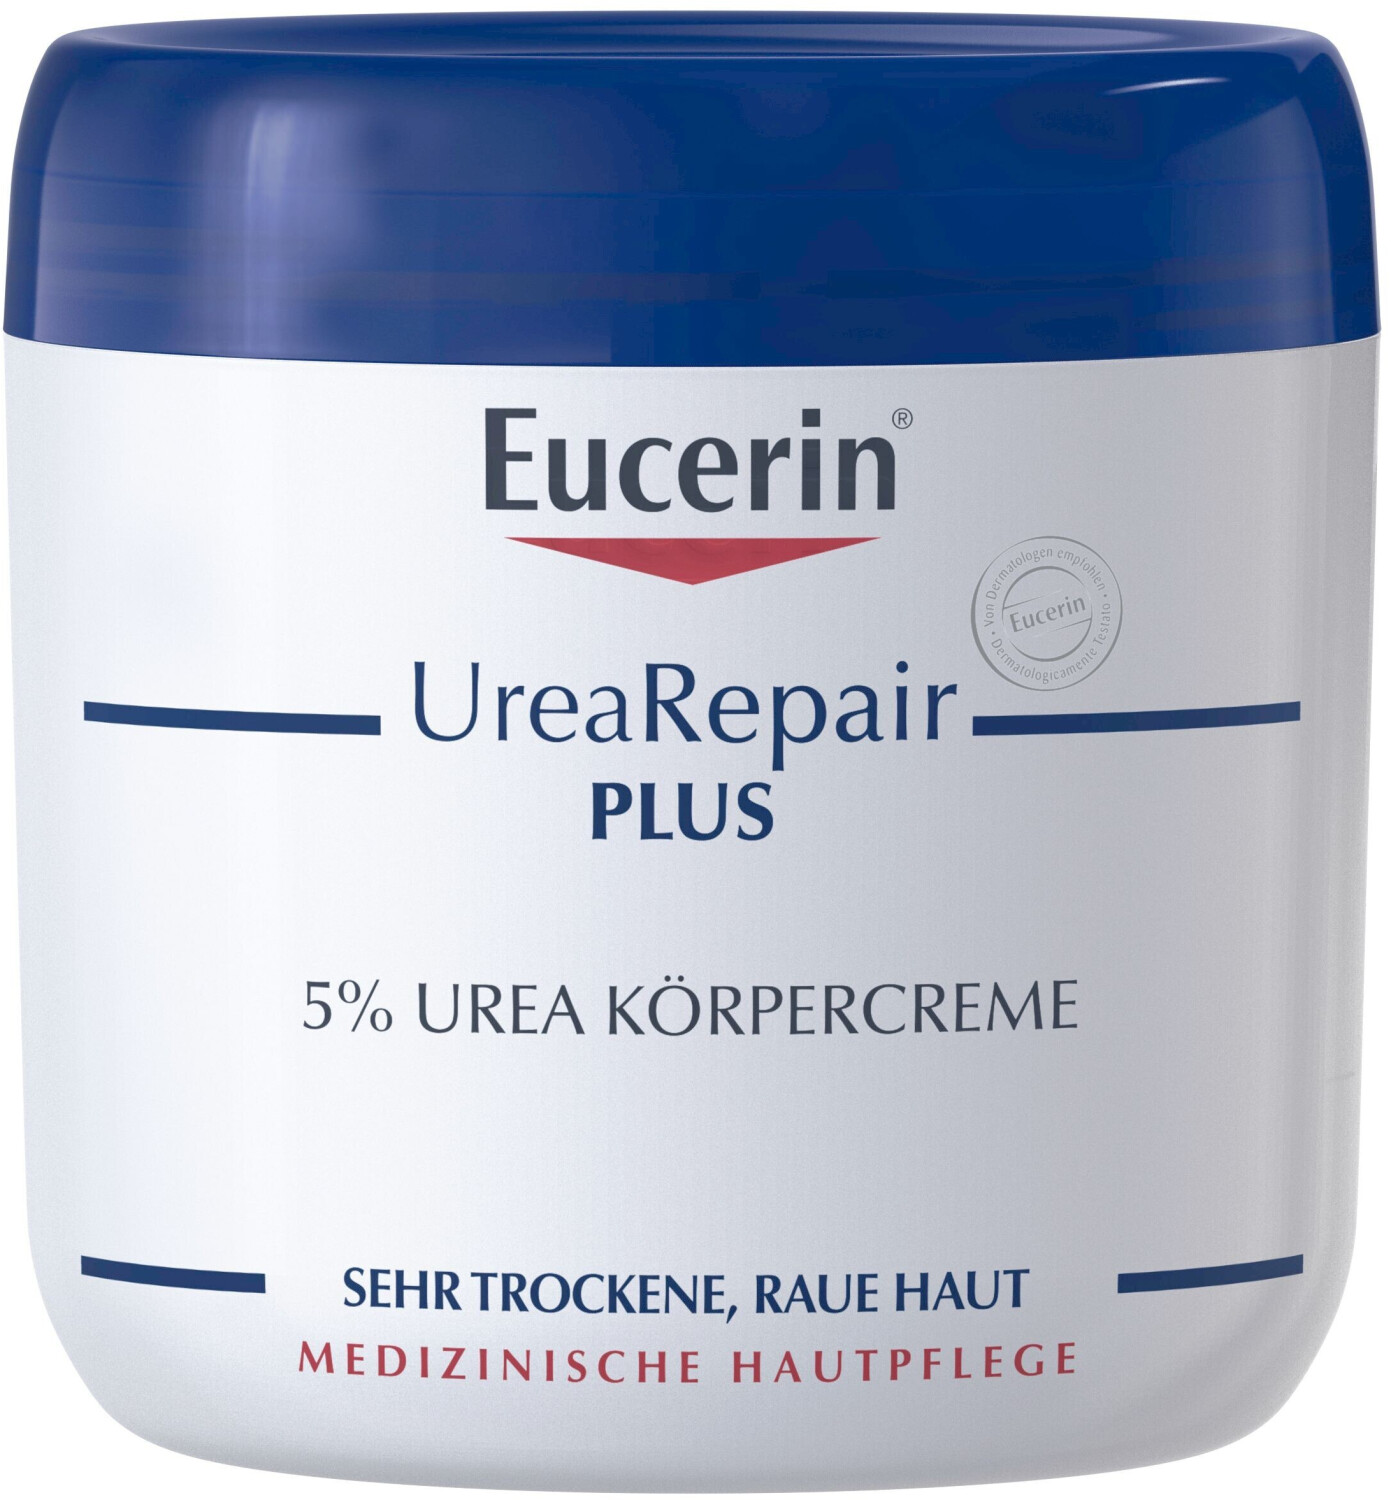 Eucerin крем купить. Eucerin urea Repair Plus. Urea Repair Plus крем. Eucerin urea Repair Plus 5%. Eucerin urea Repair Plus 450 мл.